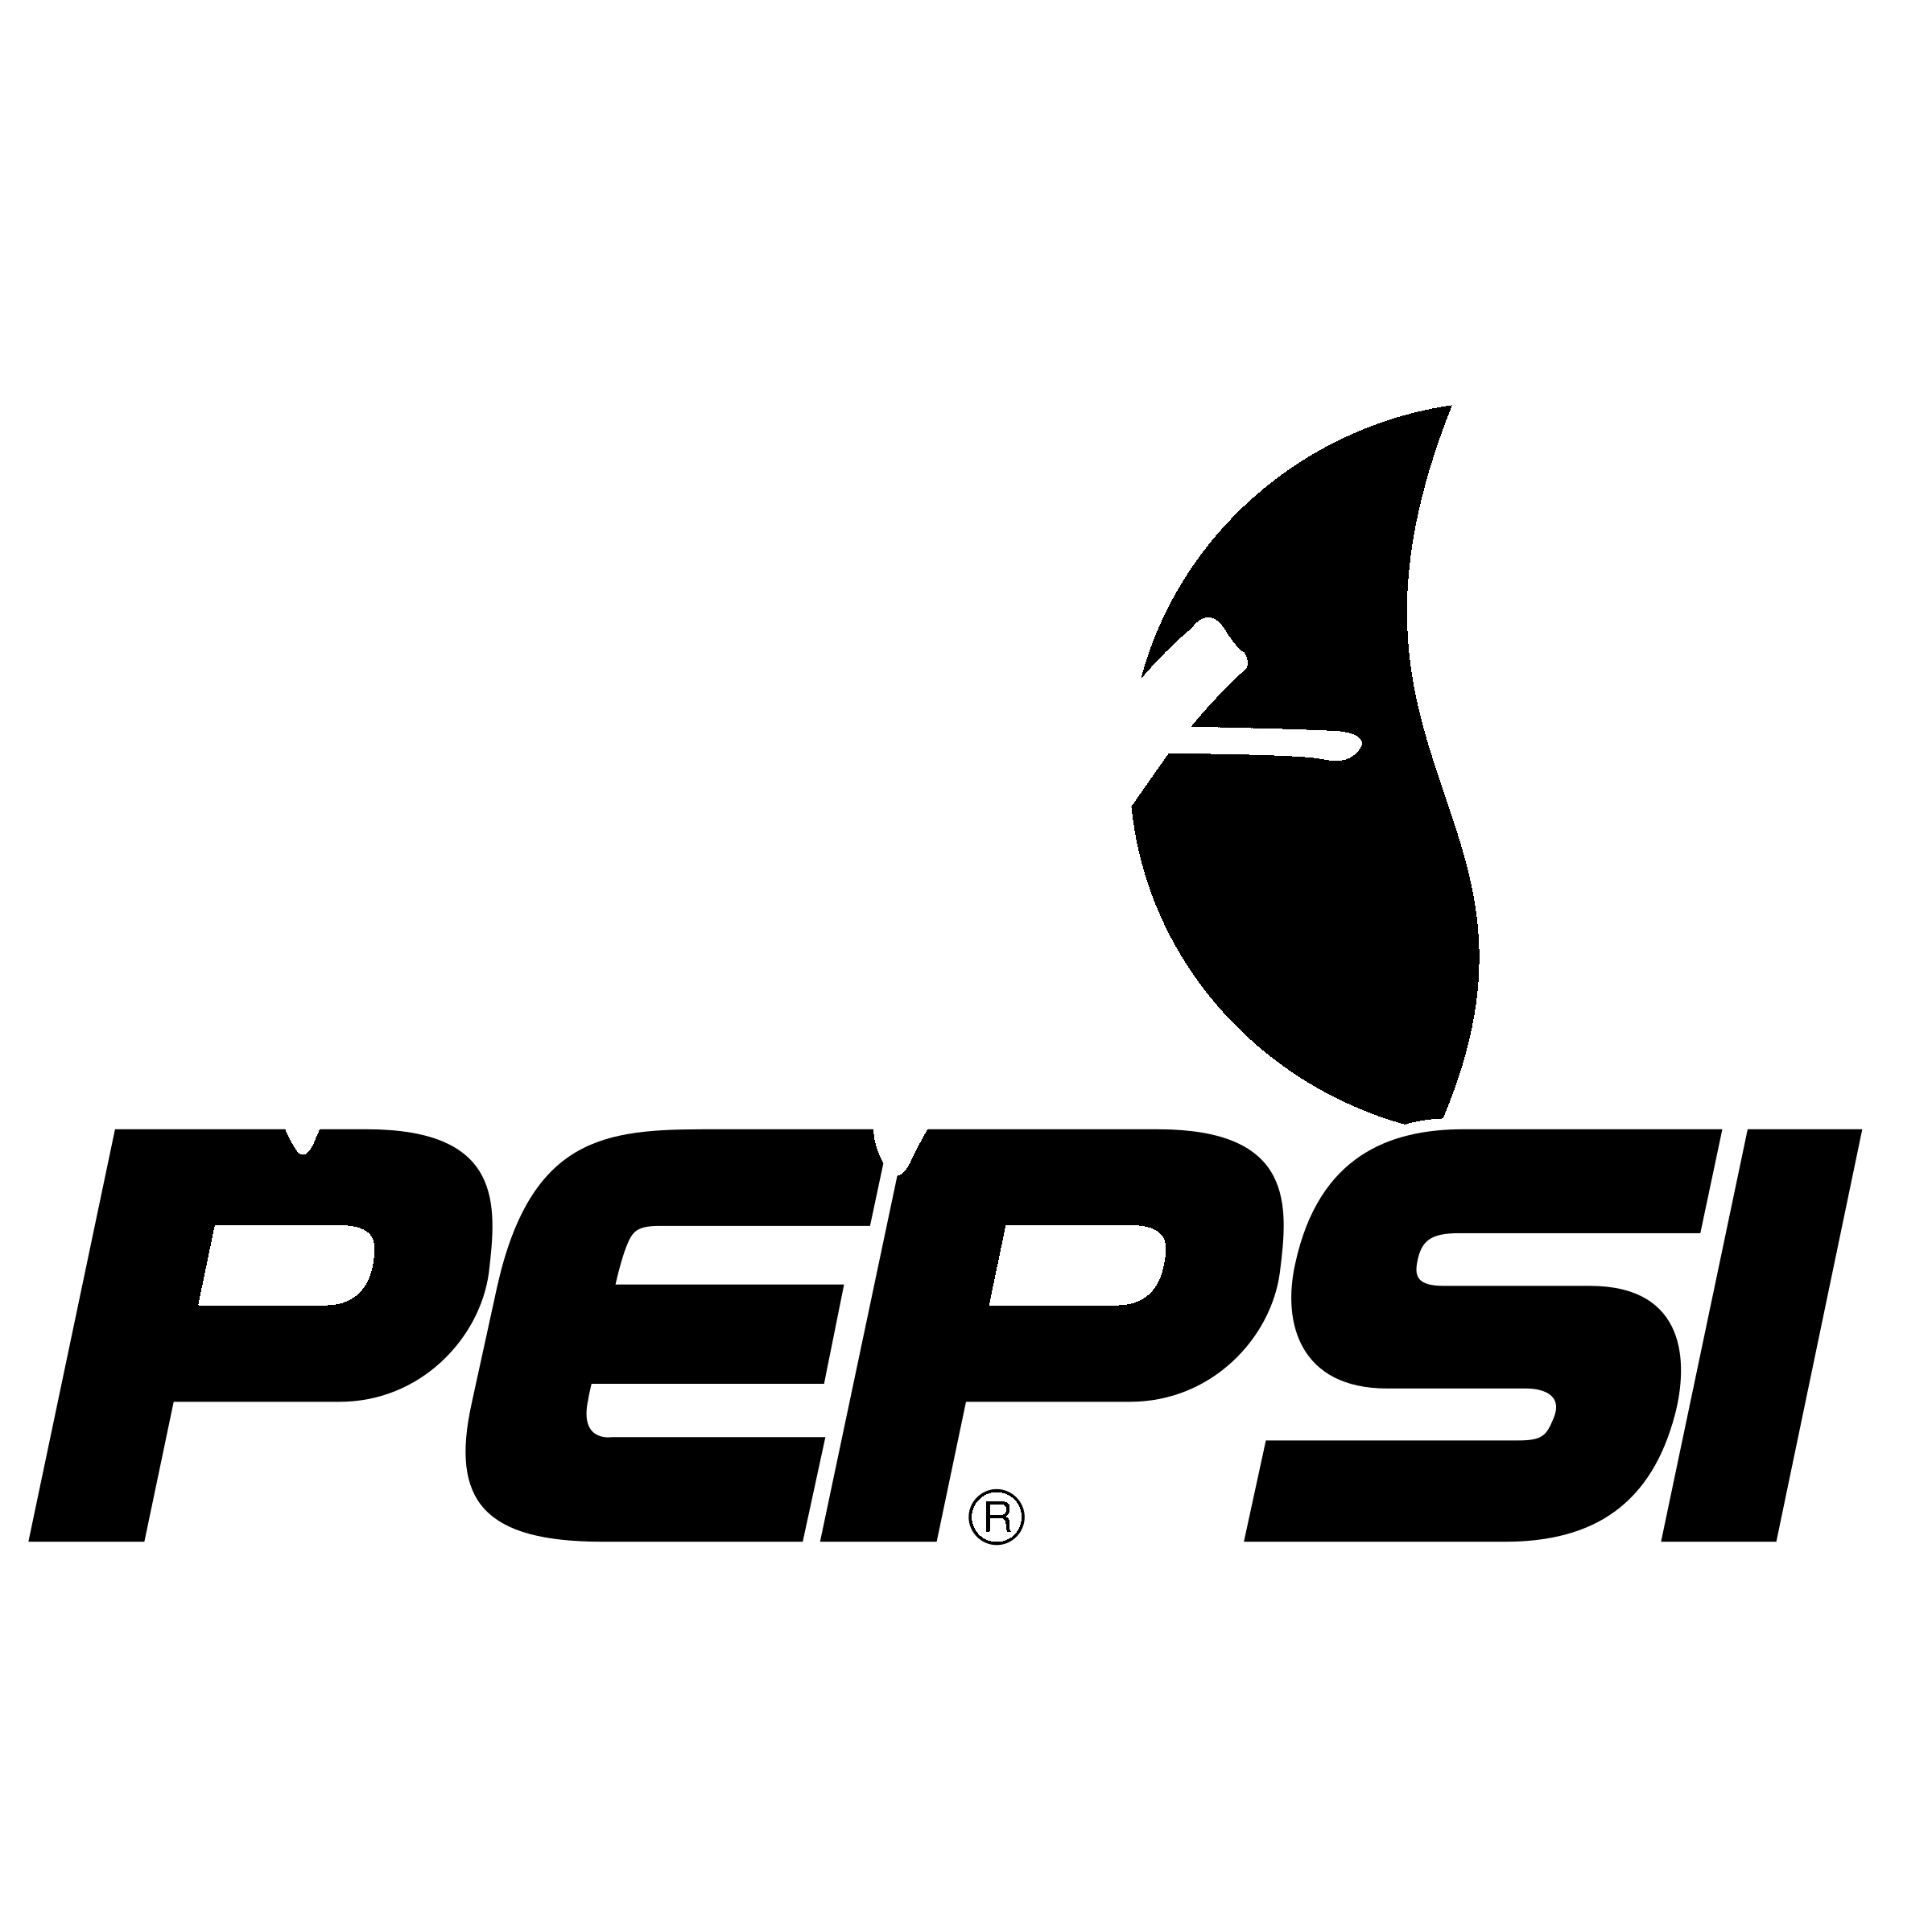 Black and White Pepsi Logo - LogoDix